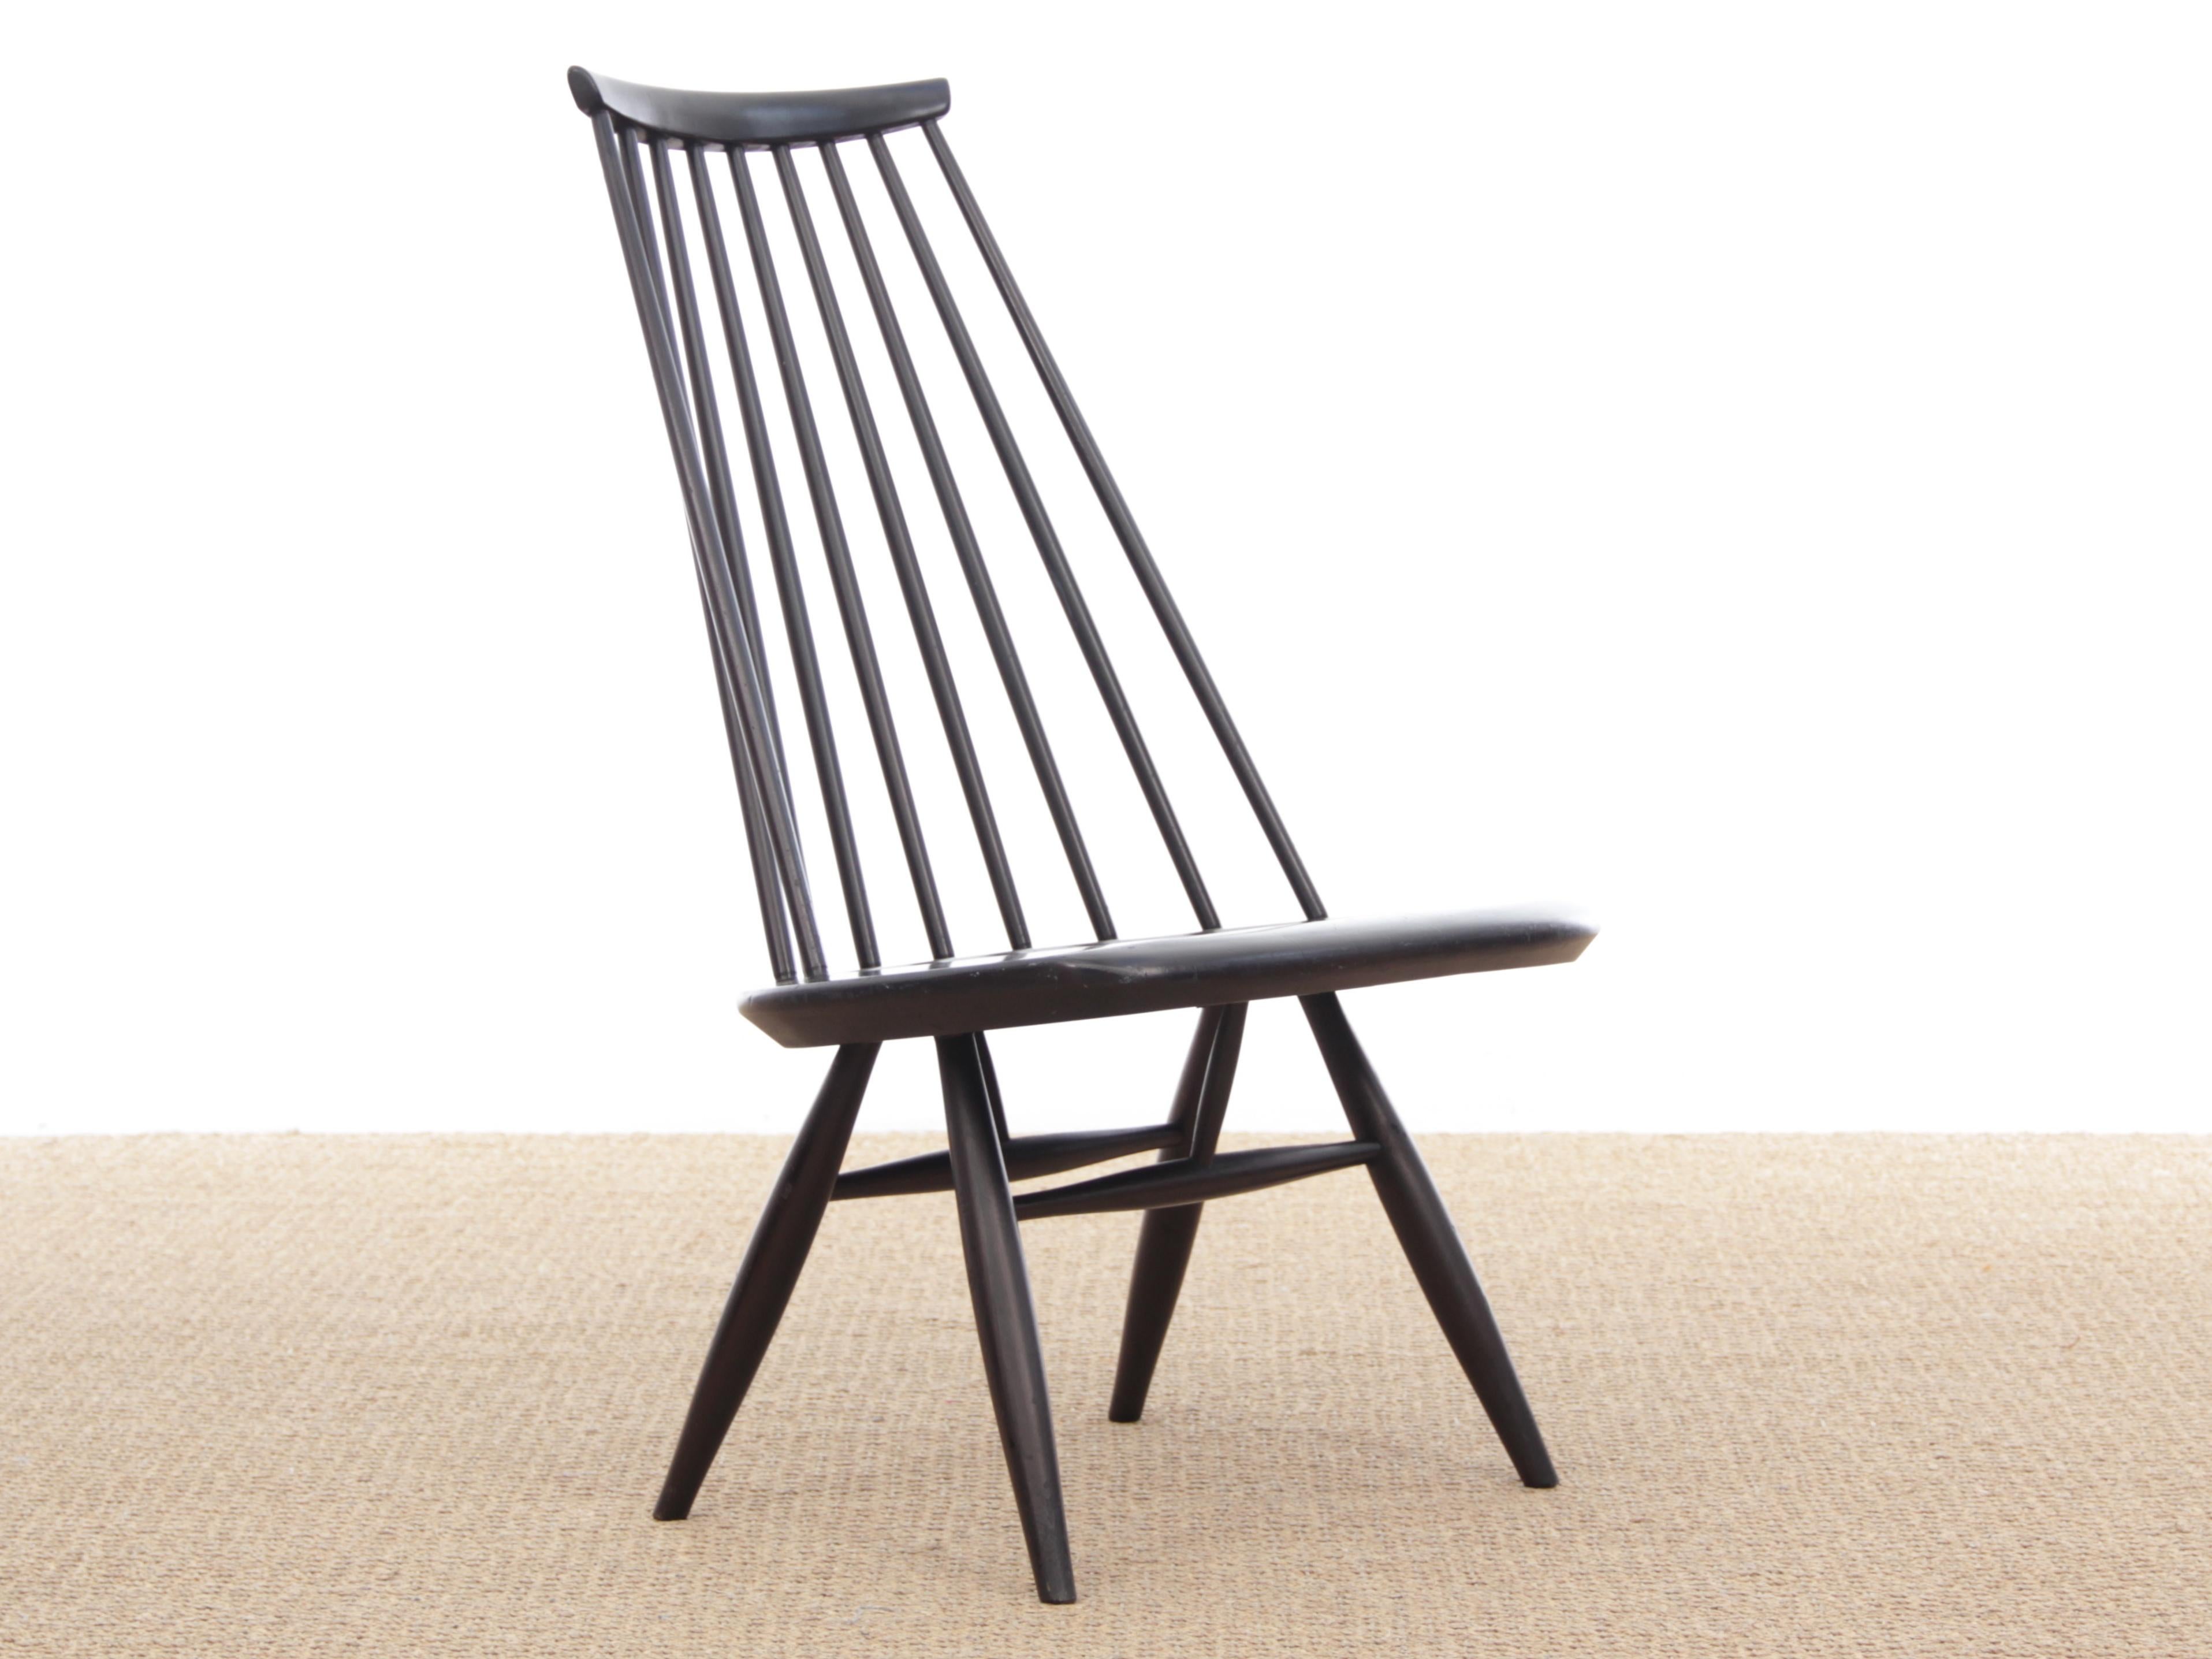 Scandinavian Modern Mid-Century Modern Scandinavian Pair of Mademoiselle Chair by Tapiovaara For Sale